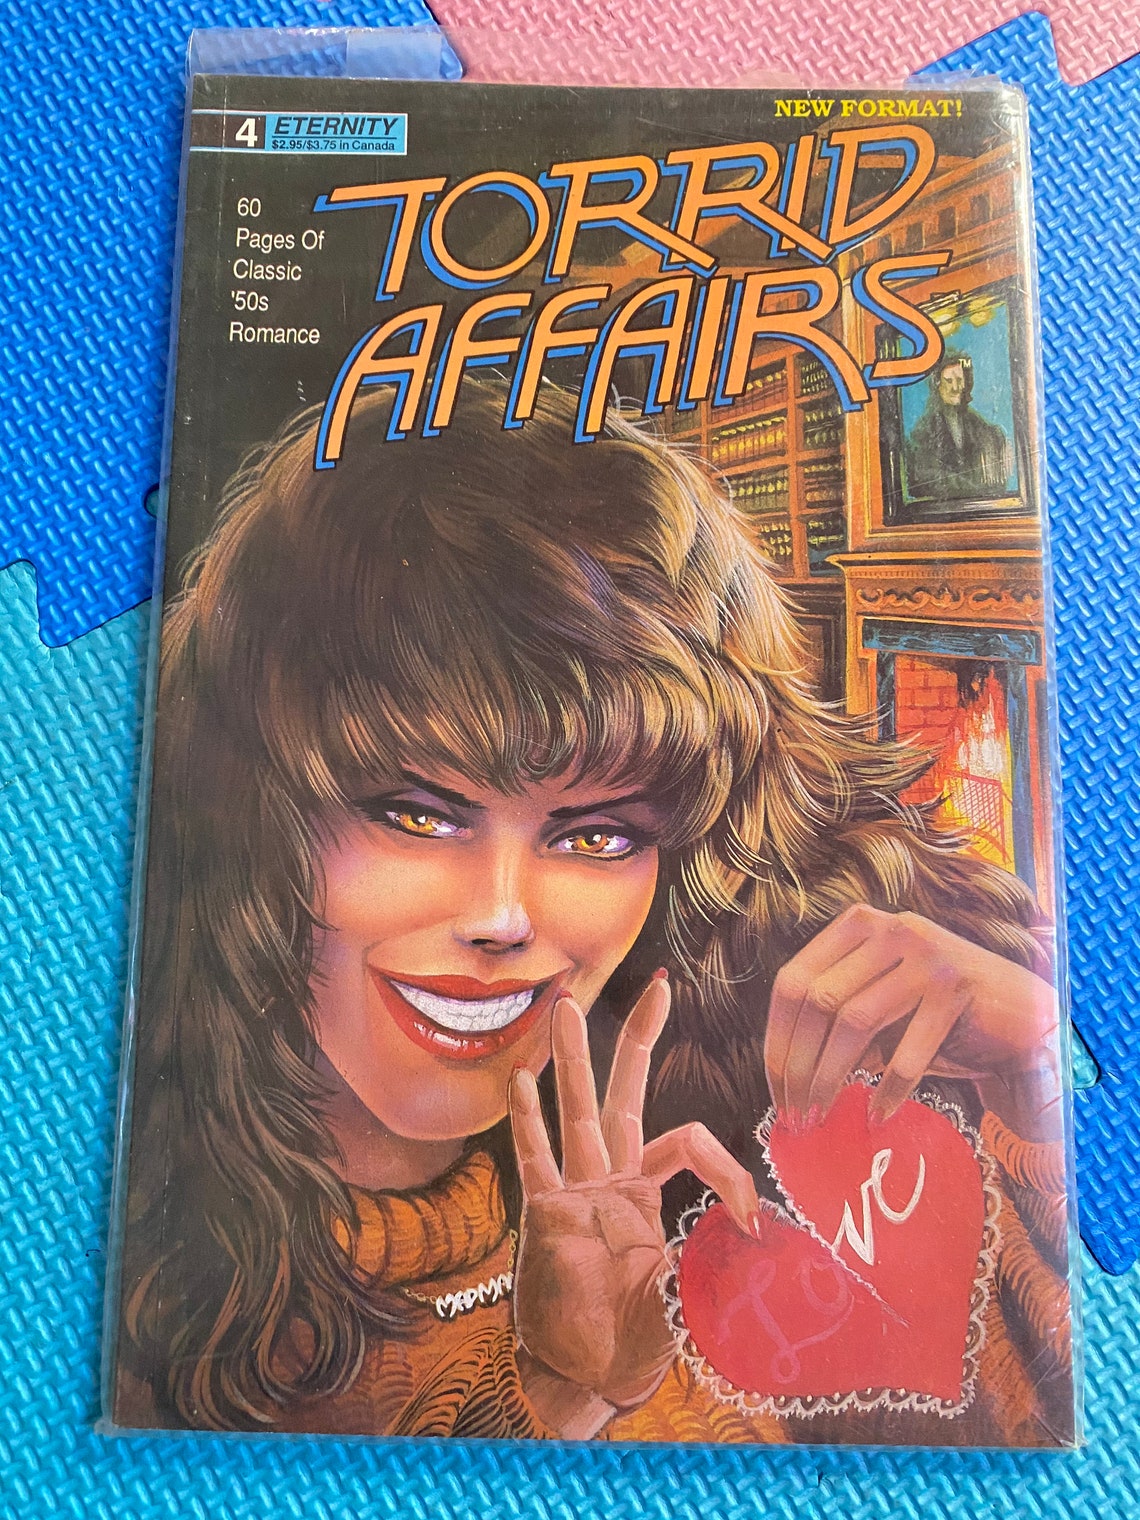 Torrid Affairs Erotic Adult Comic Books Eternity Comics Etsy